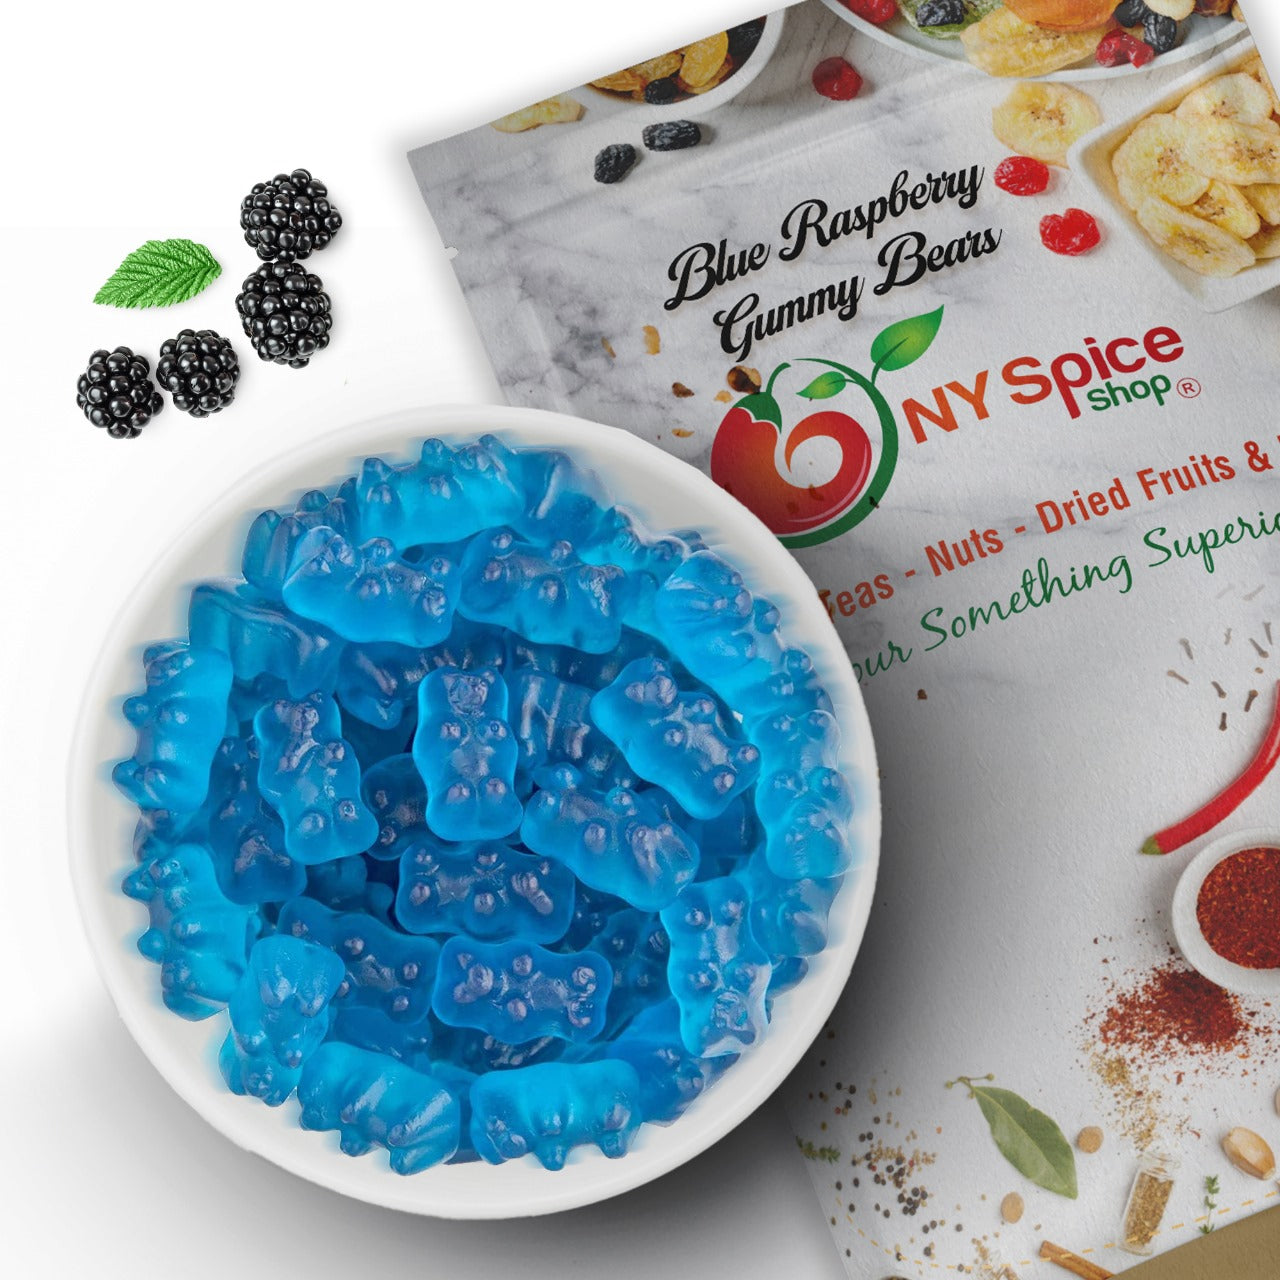 Boppin Blue Raspberry Gummy Bears - NY Spice Shop